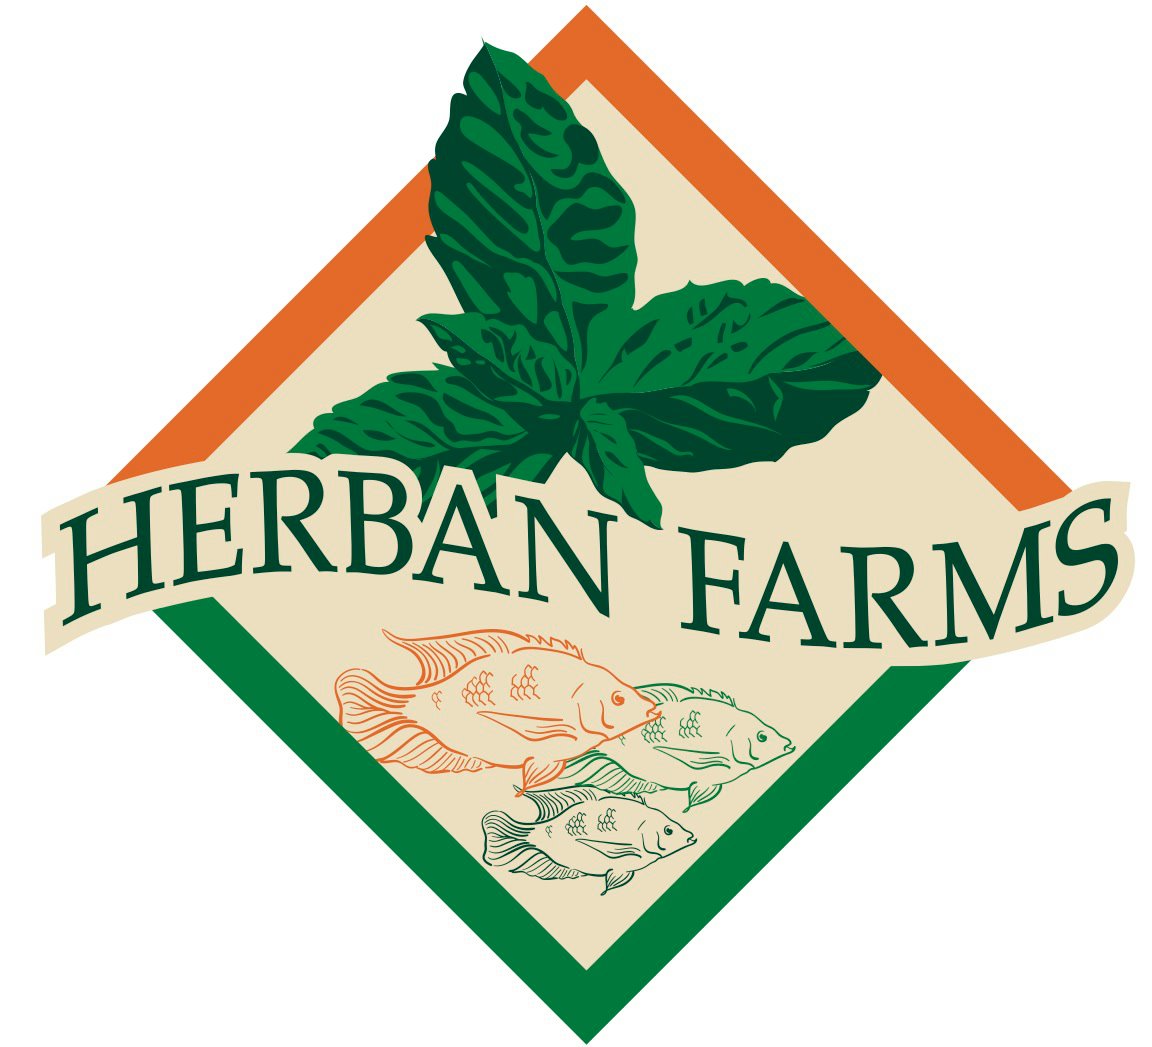 HERBAN FARMS